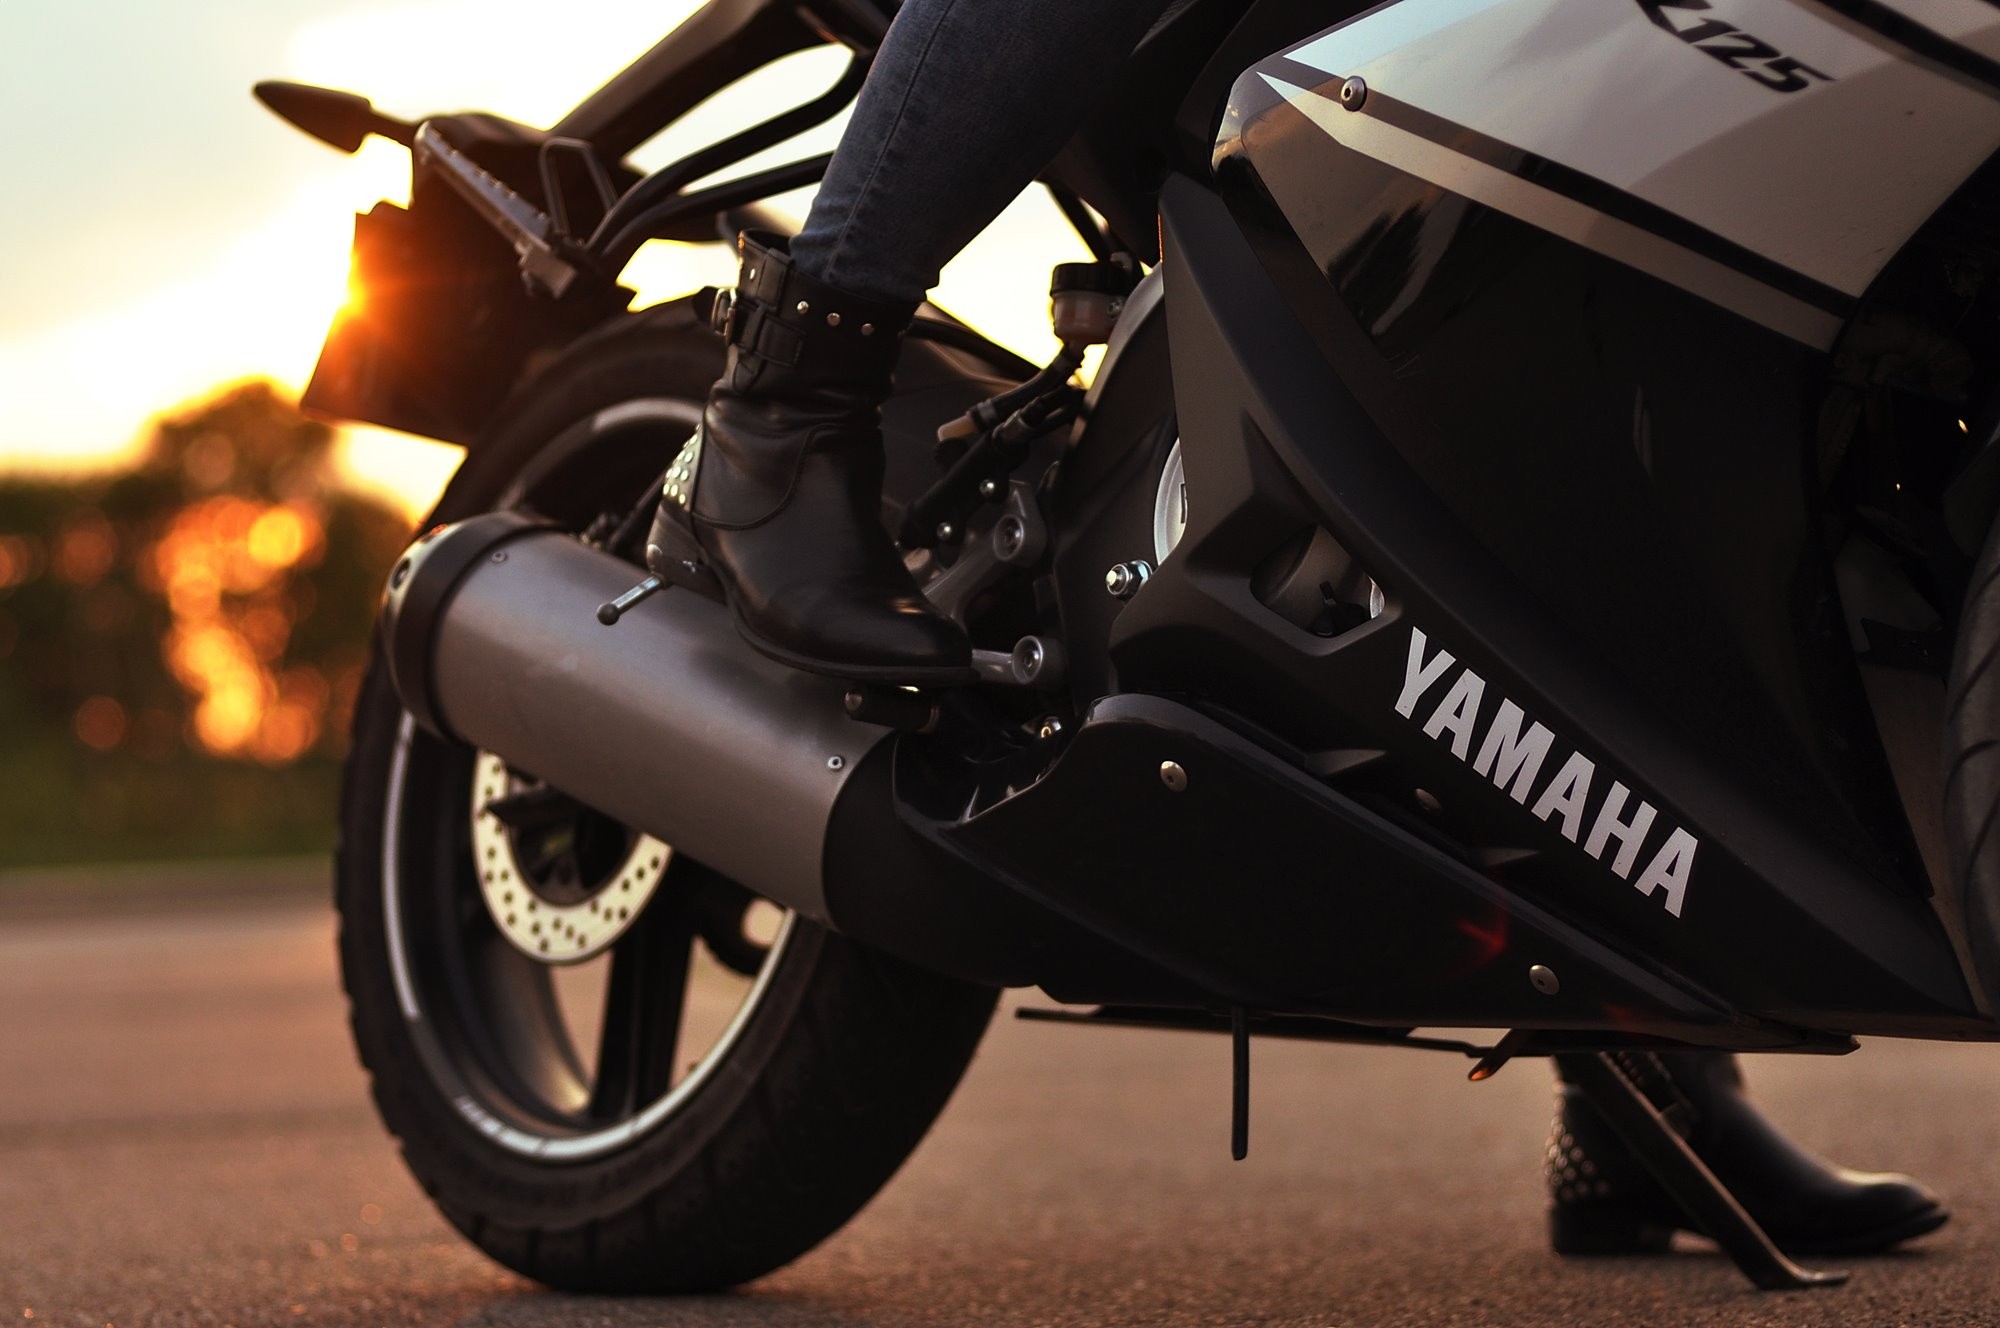  Yamaha YZF R 125  Vehicle Motorcycle Wallpapers HD 